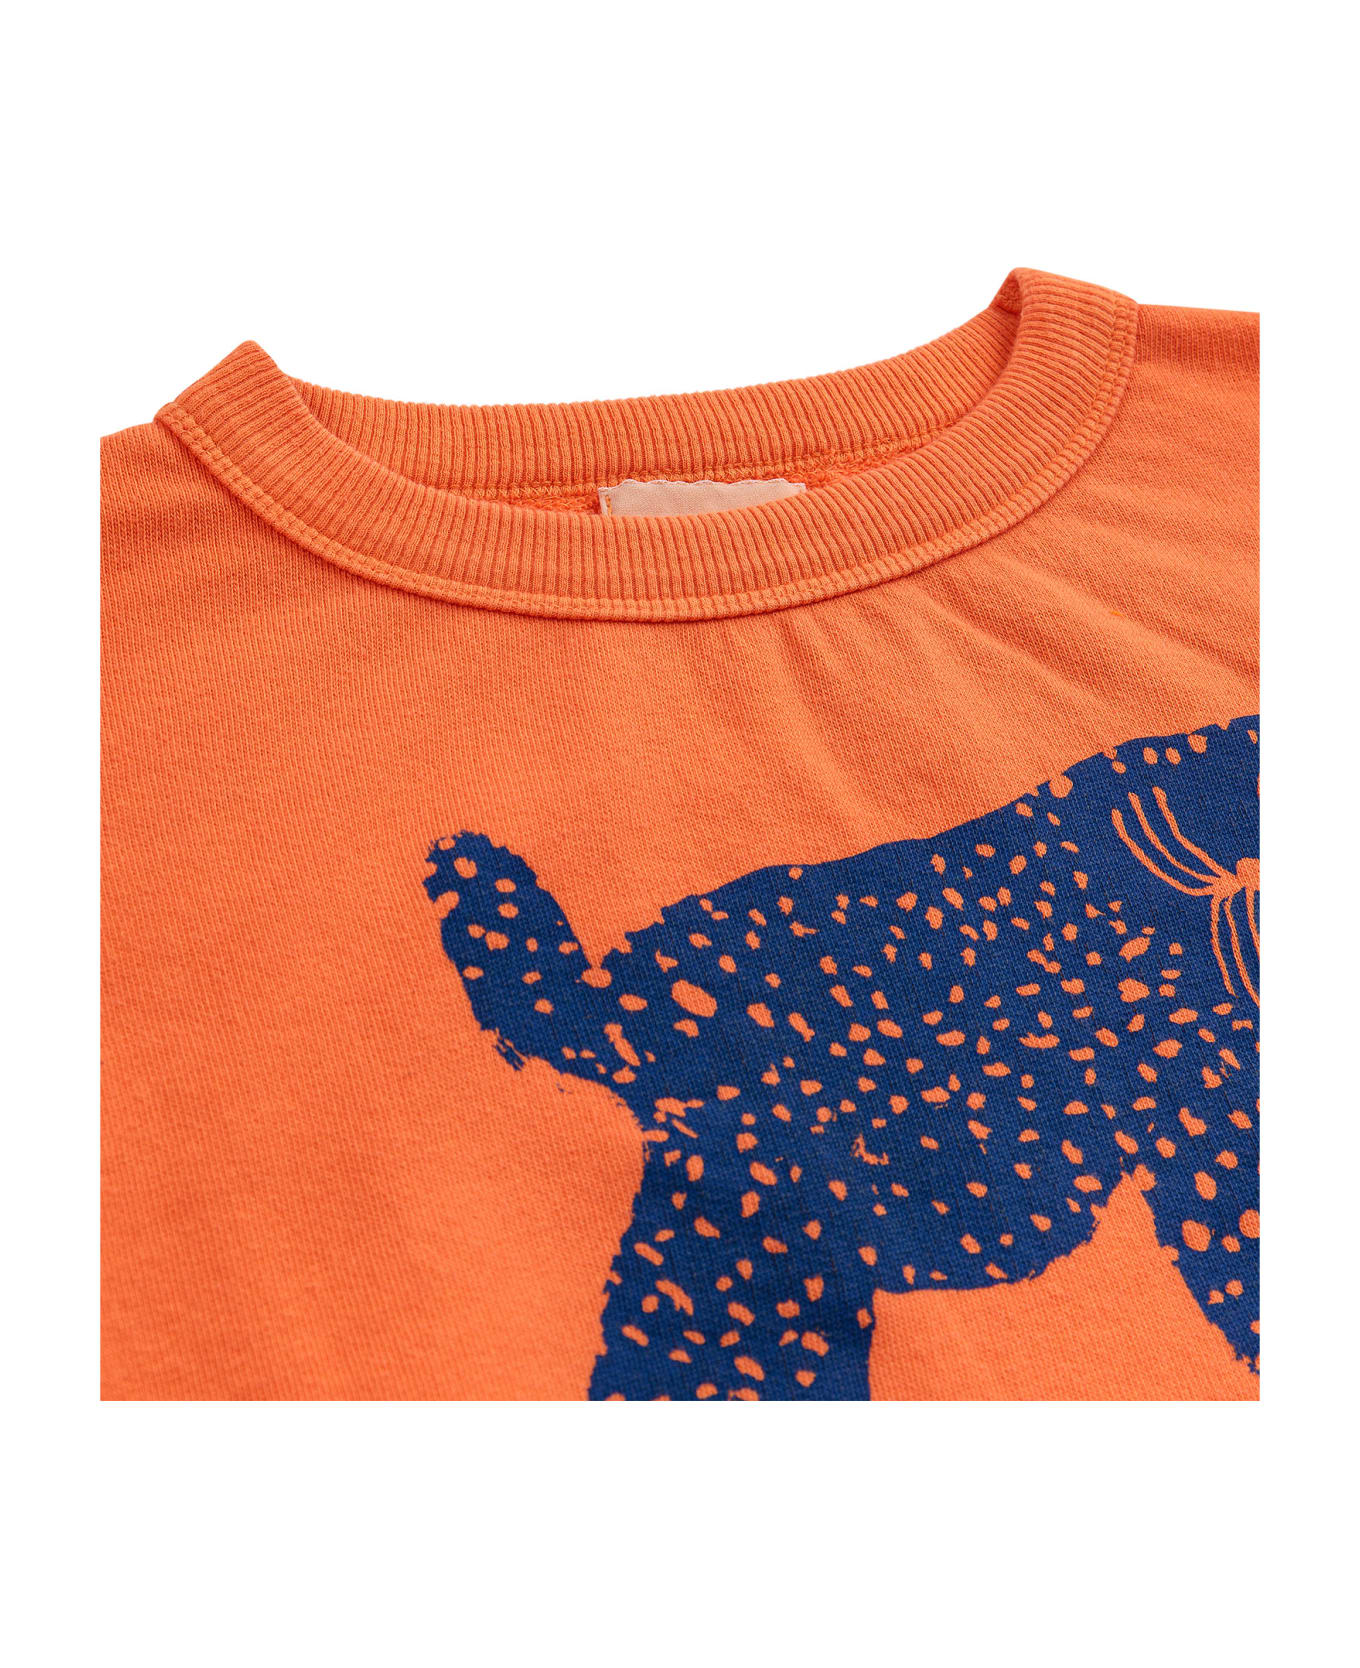 Bobo Choses Orange Sweatshirt For Kids With Cheetah - Orange